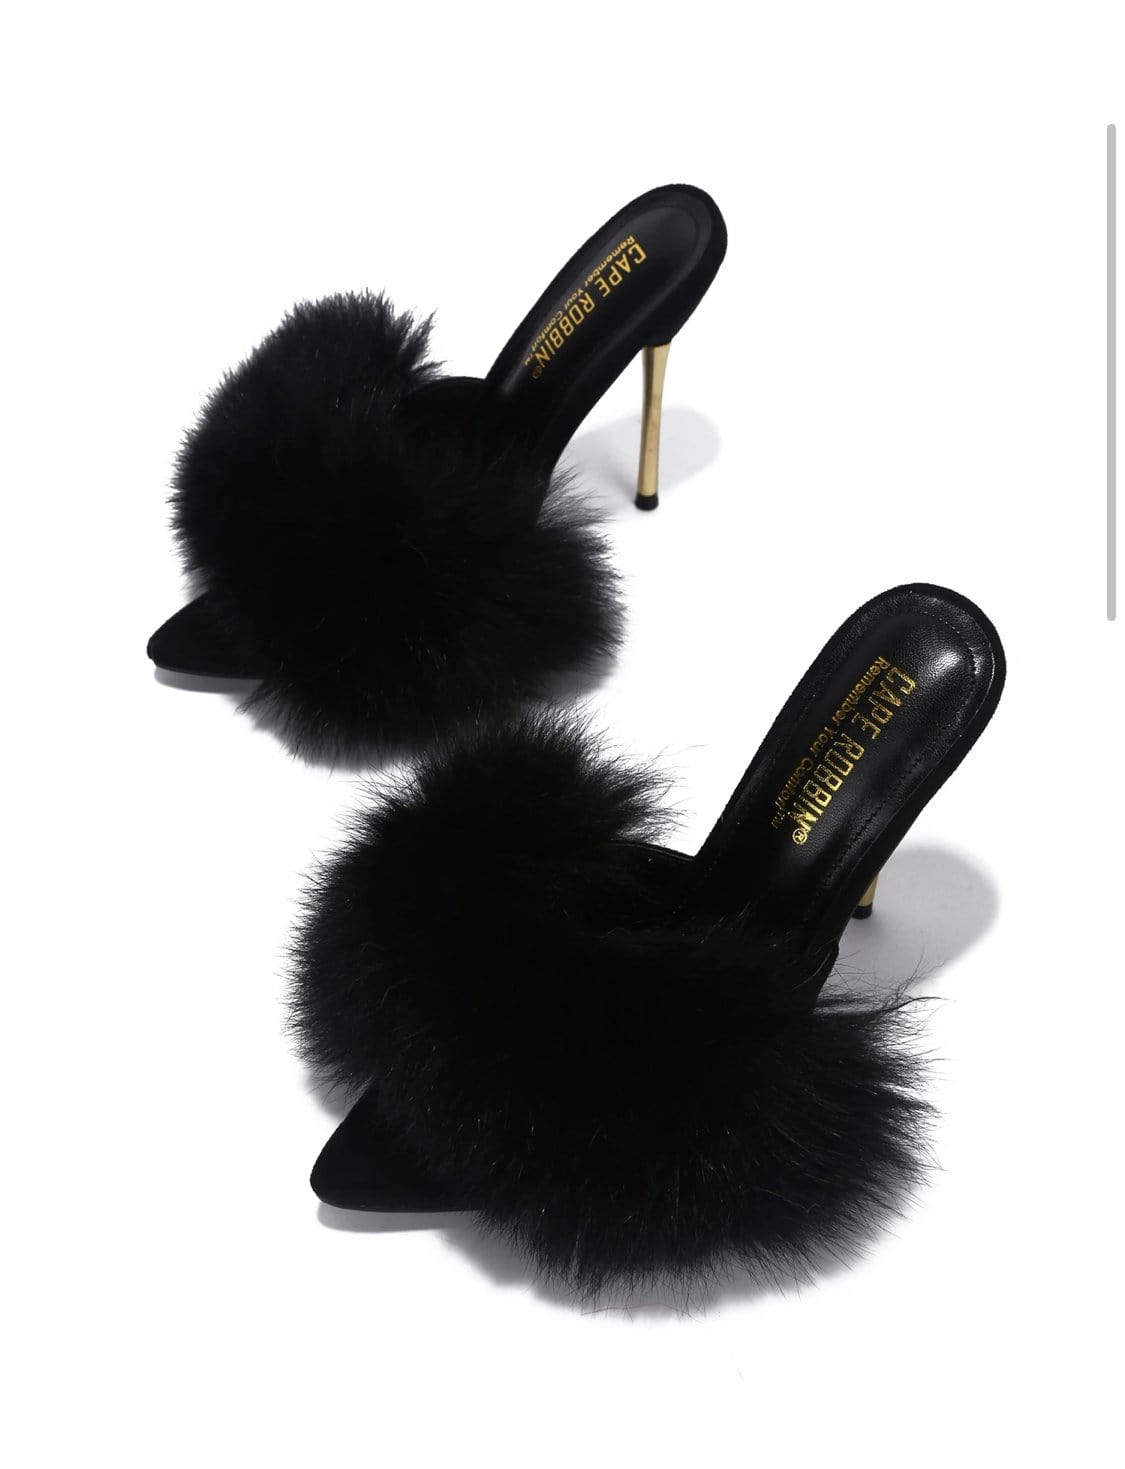 Cape Robbin Shoes Fuji Center Of It All Heeled Sandal Black